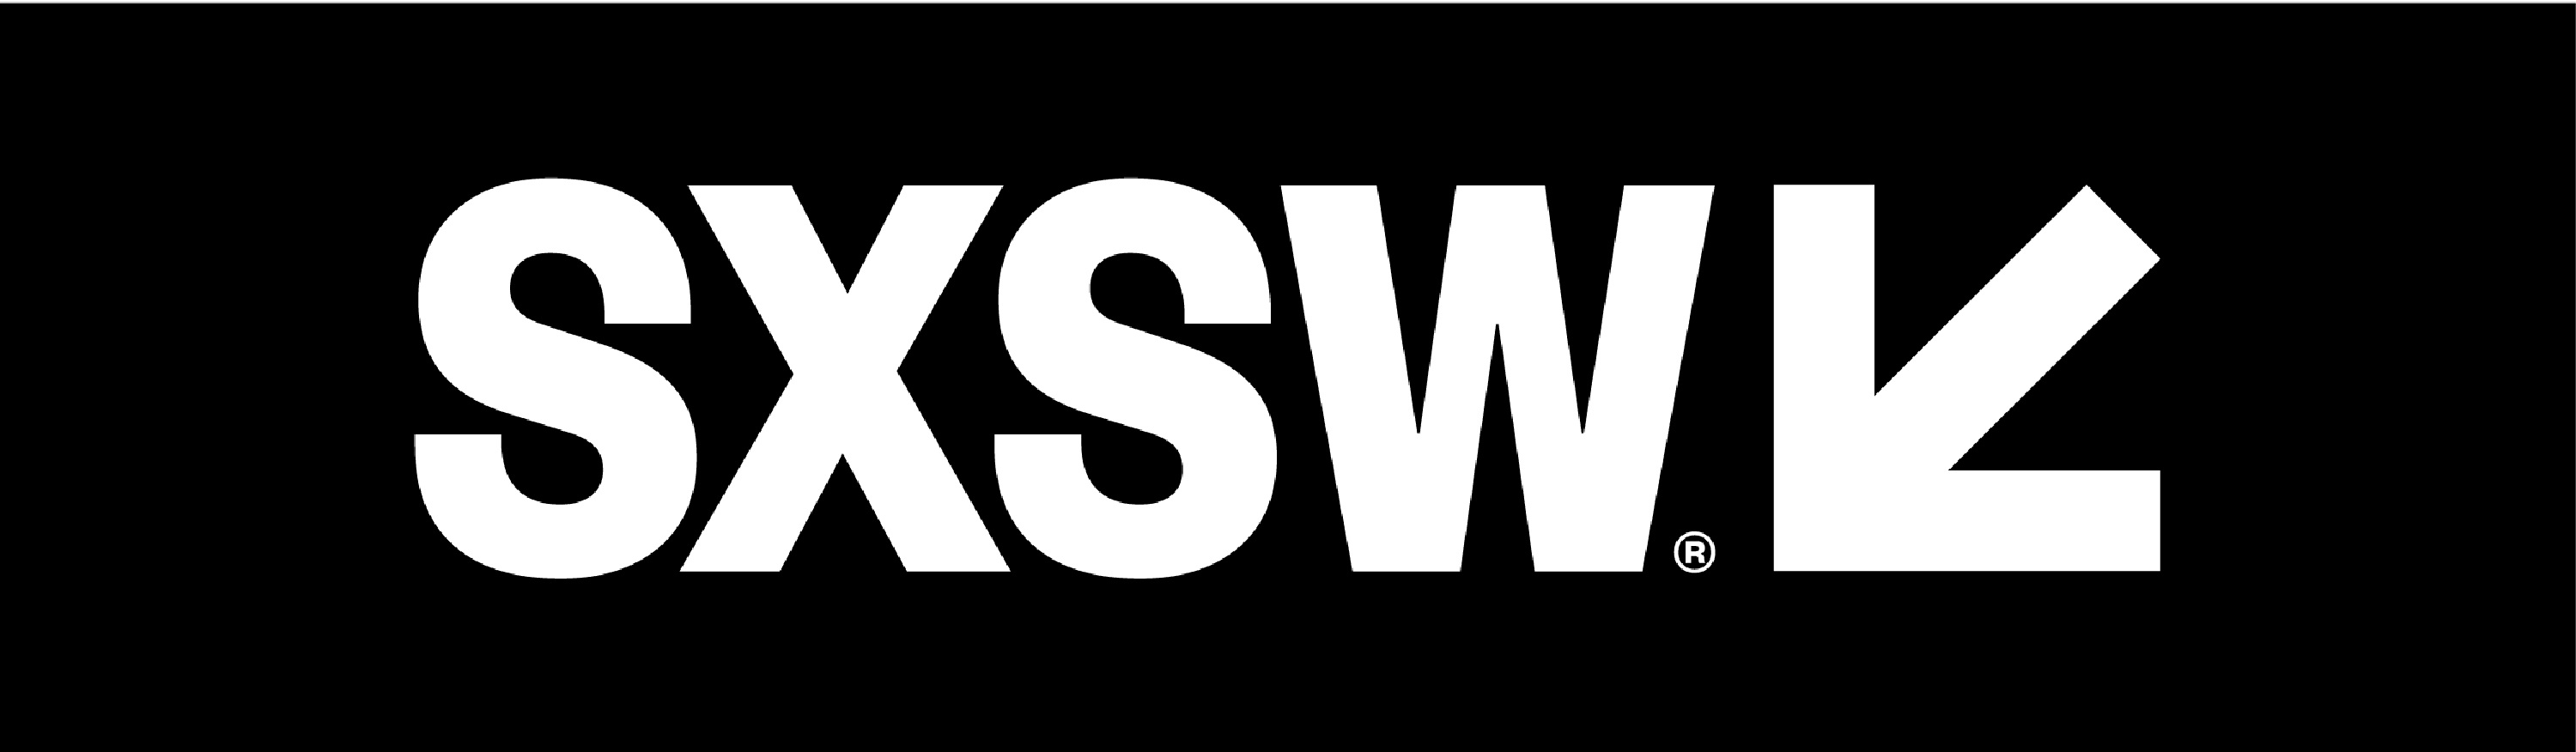 SXSW Announces New Featured Speakers For 2022 Event Grateful Web